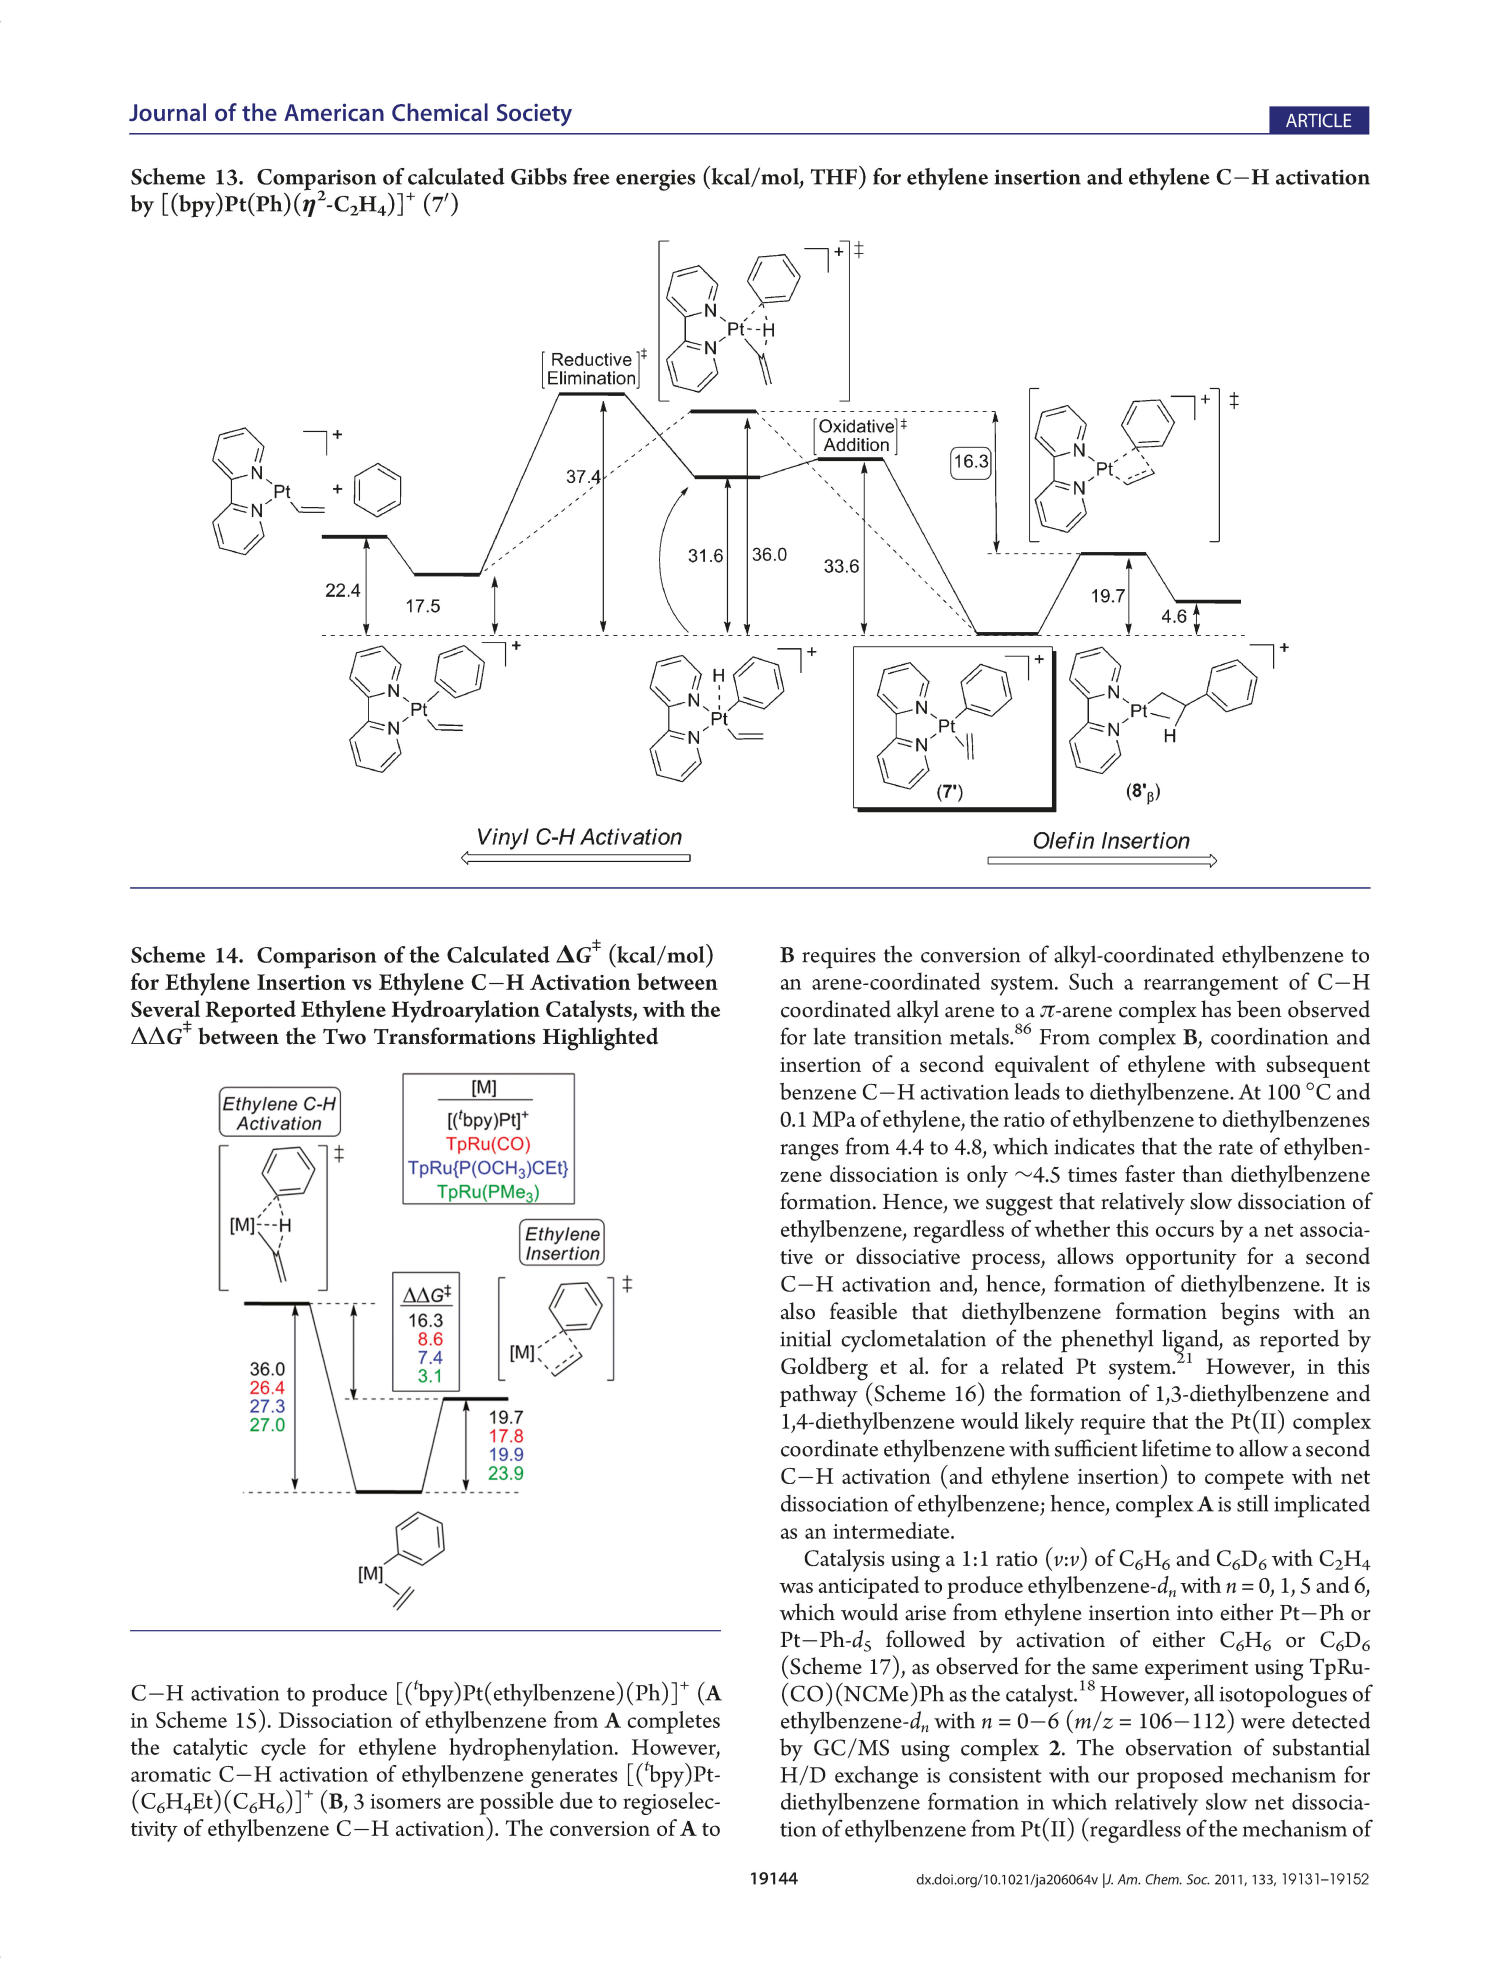 Mechanistic Studies of Ethylene Hydrophenylation Catalyzed by Bipyridyl Pt(II) Complexes
                                                
                                                    19144
                                                